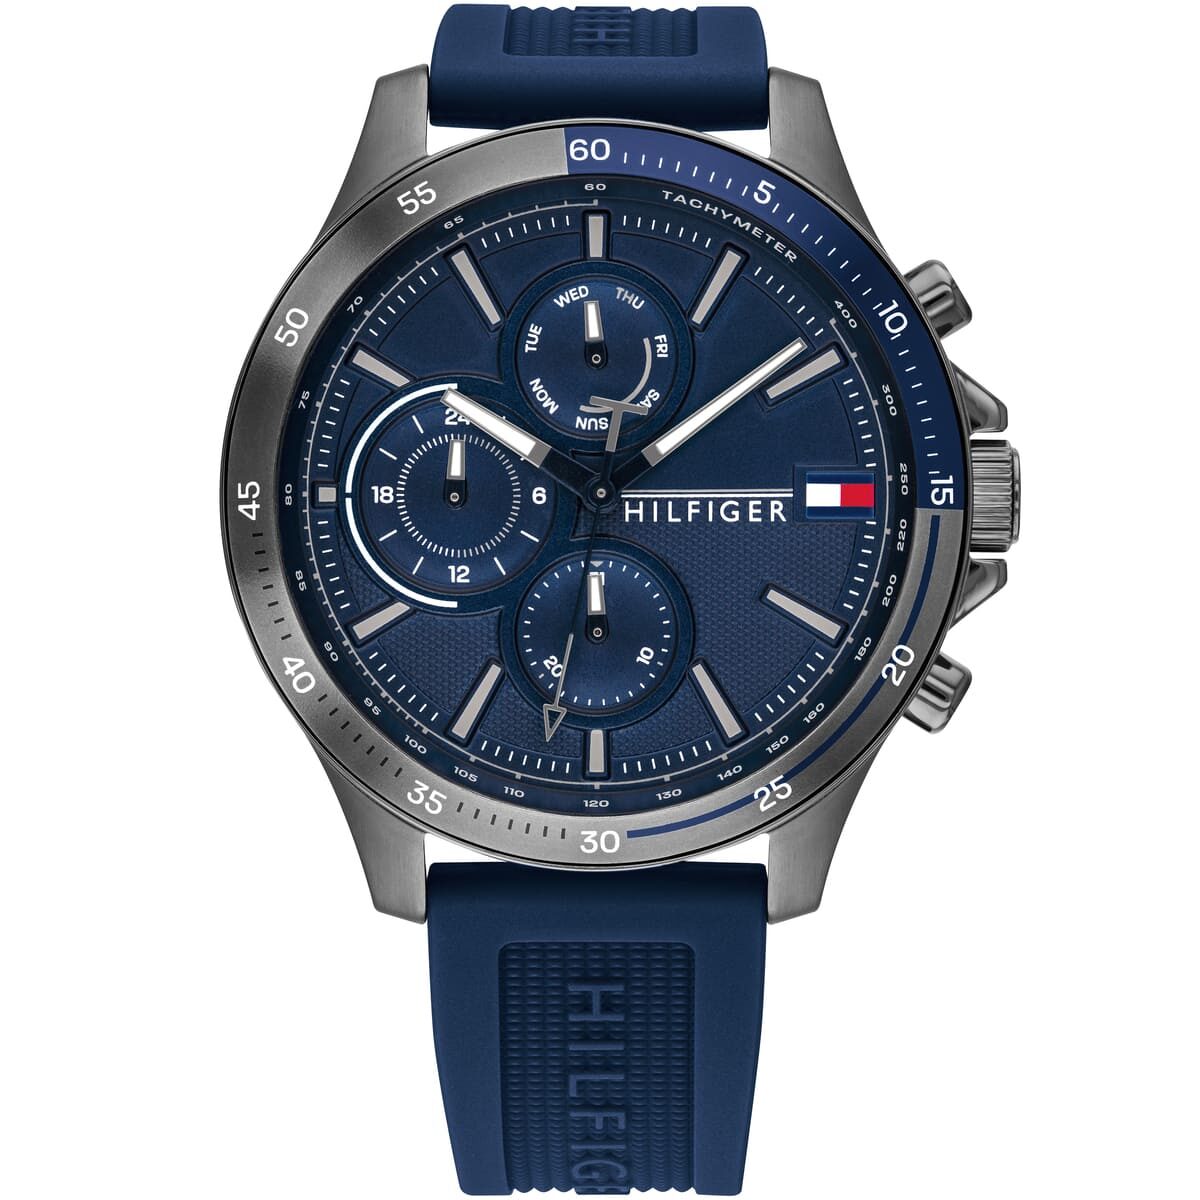 1791721-tommy-hilfiger-watch-men-blue-dial-rubber-strap-quartz-analog-day-date-month-bank